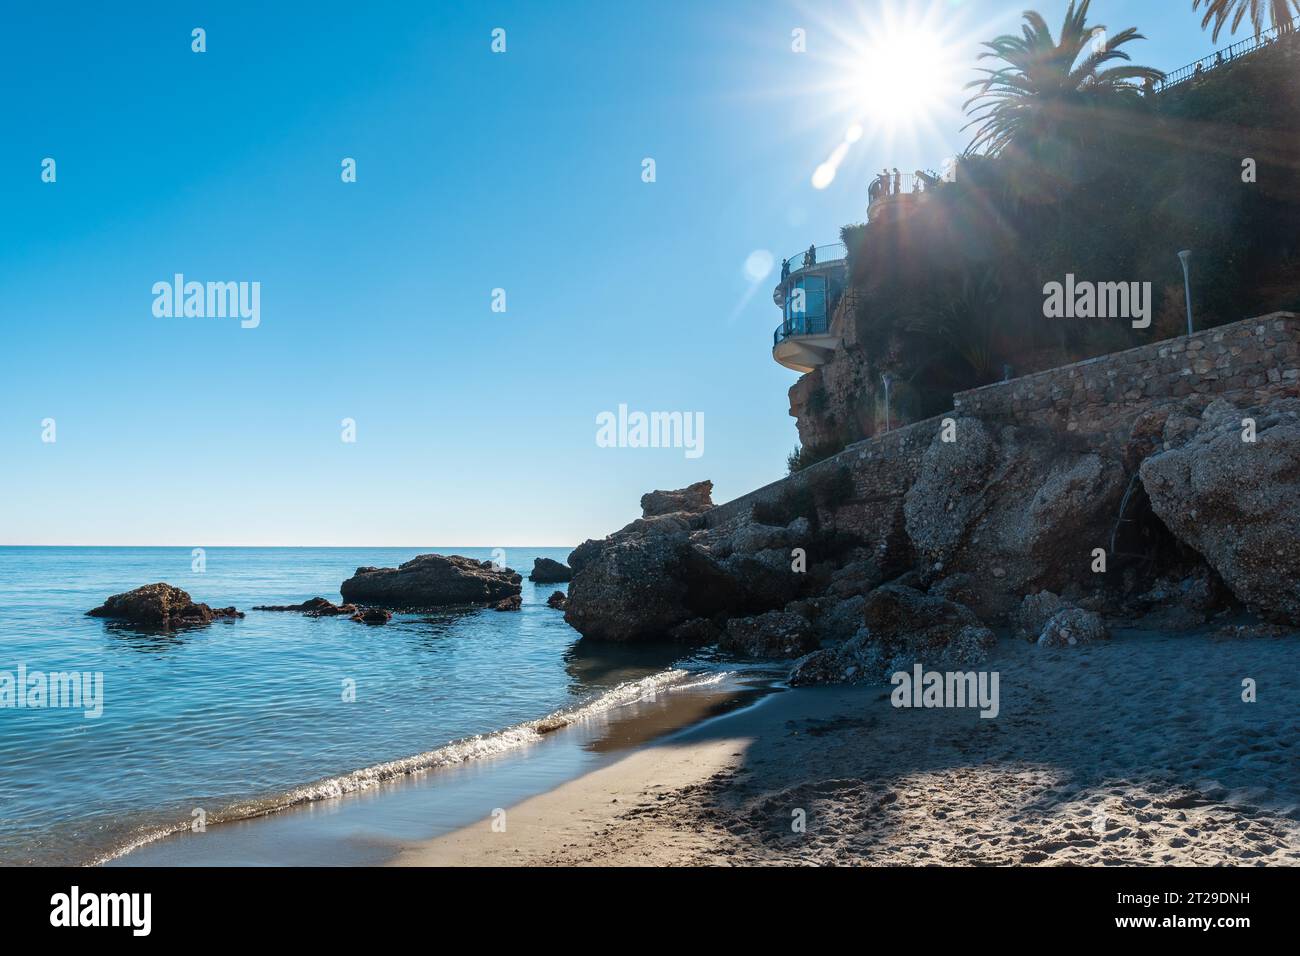 Das Meer in den kleinen Buchten am Strand Calahonda in der Stadt Nerja, Andalusien. Spanien. Costa del sol im mittelmeer Stockfoto